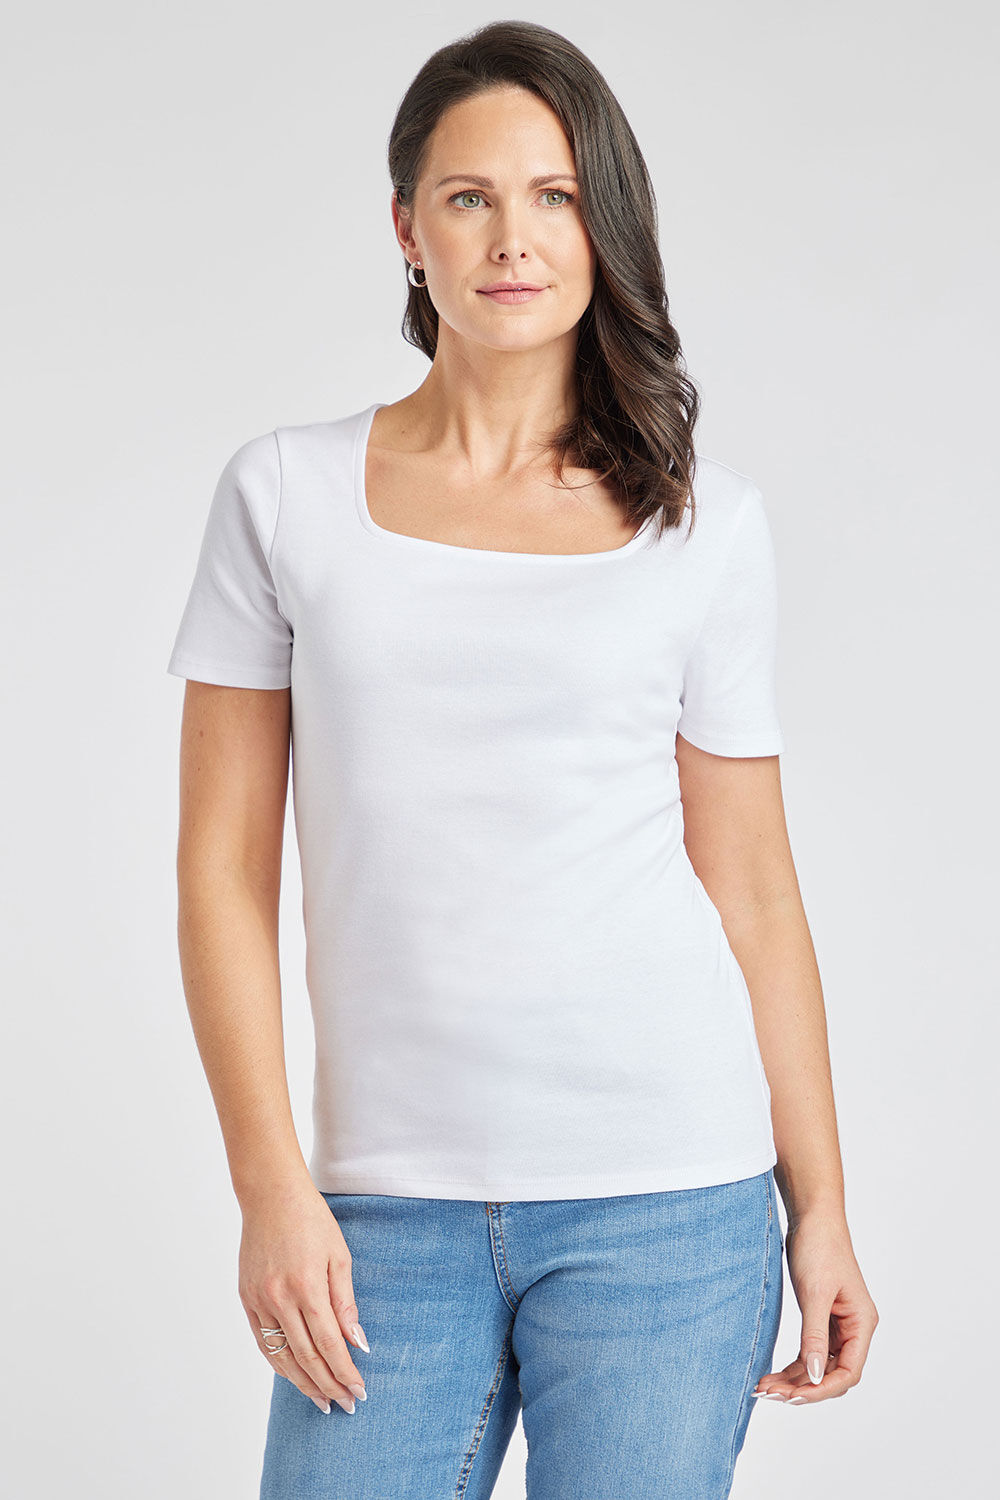 Bonmarche White Square Neck Plain T-Shirt, Size: 18